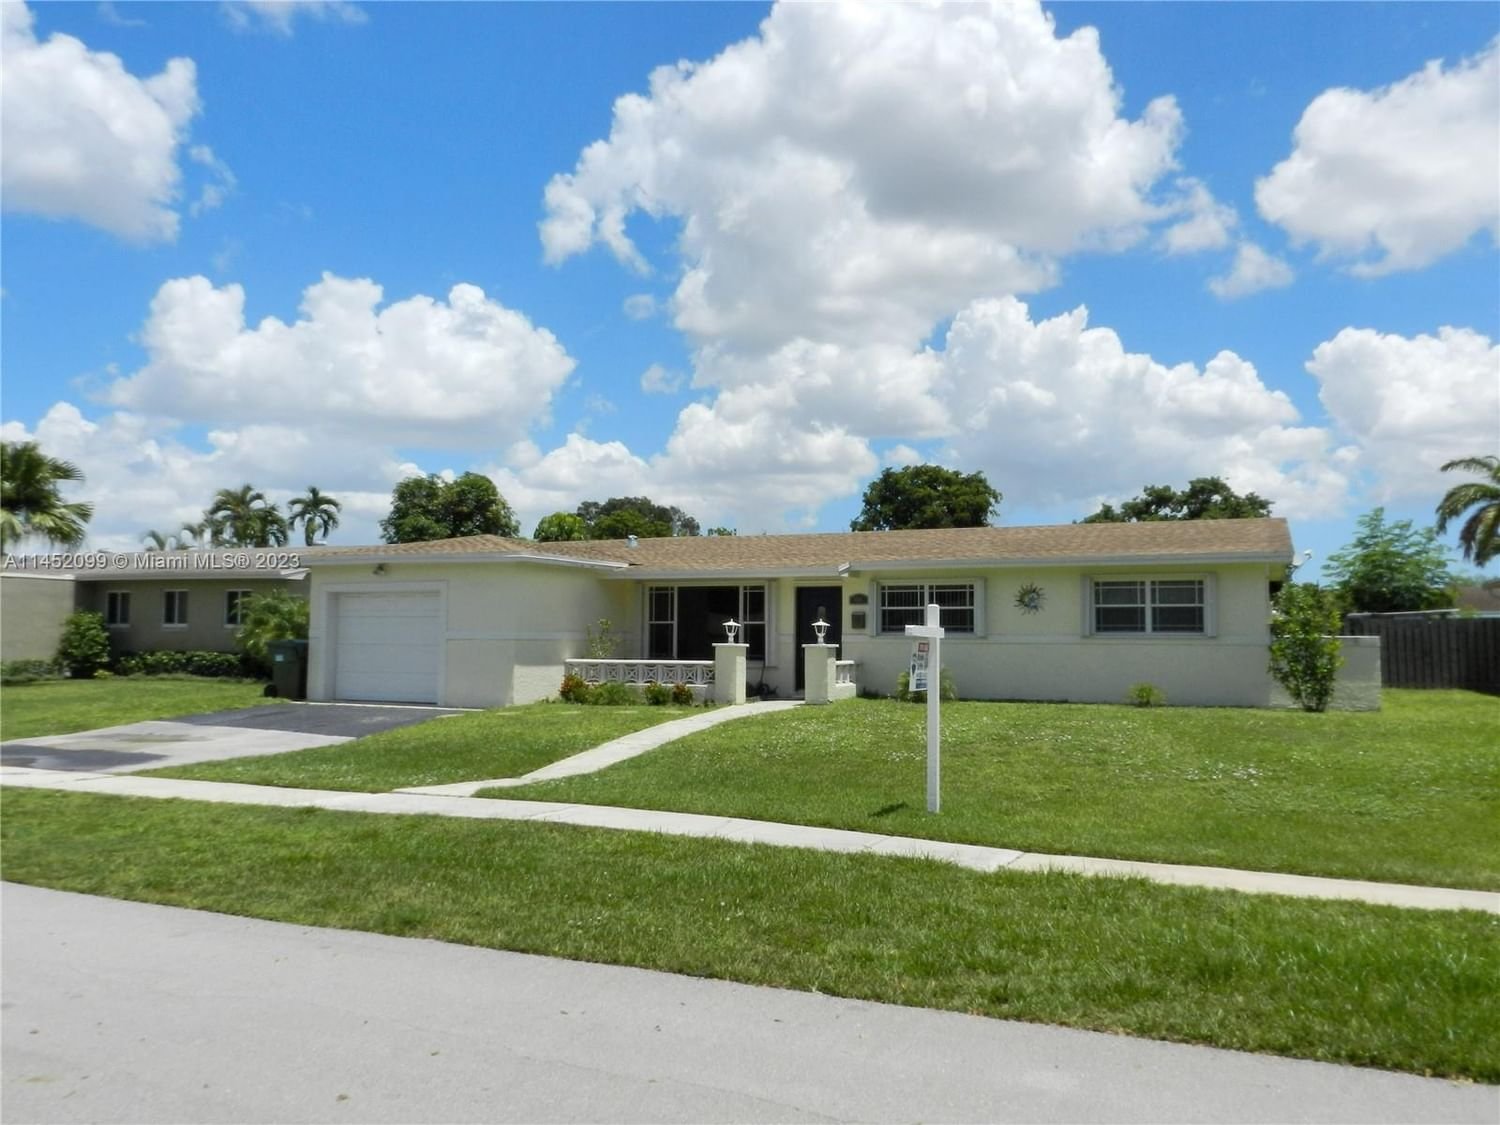 Real estate property located at 1811 88th Way, Broward County, PASADENA LAKES WEST, Pembroke Pines, FL